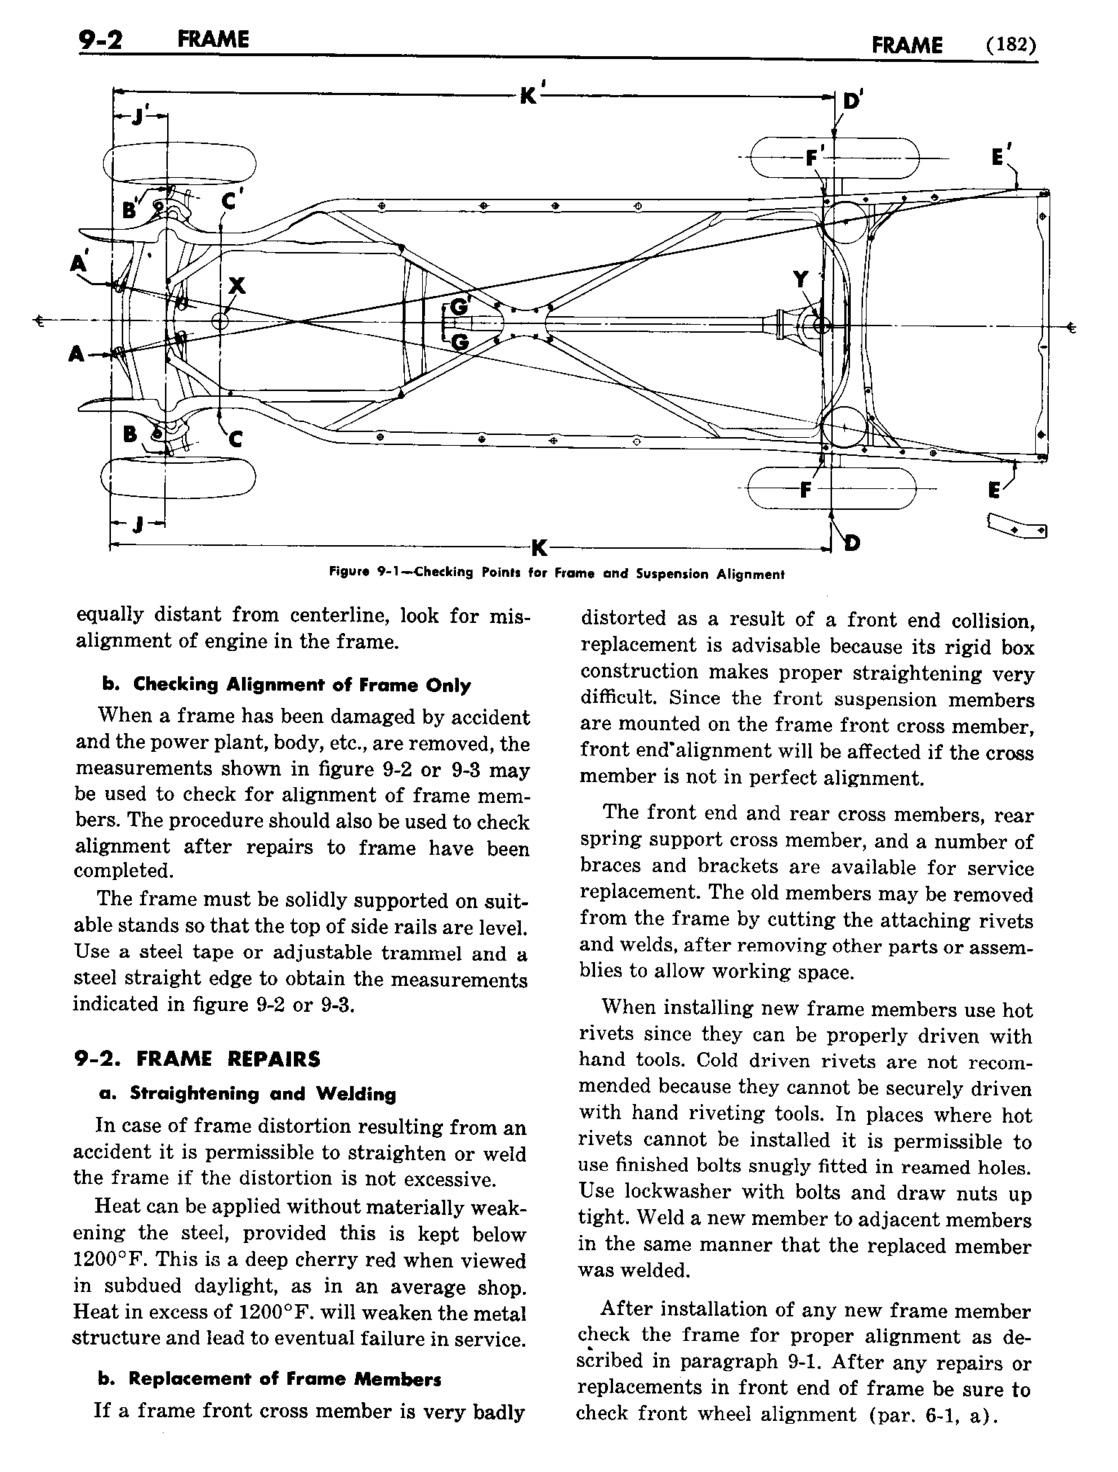 n_10 1953 Buick Shop Manual - Frame-002-002.jpg